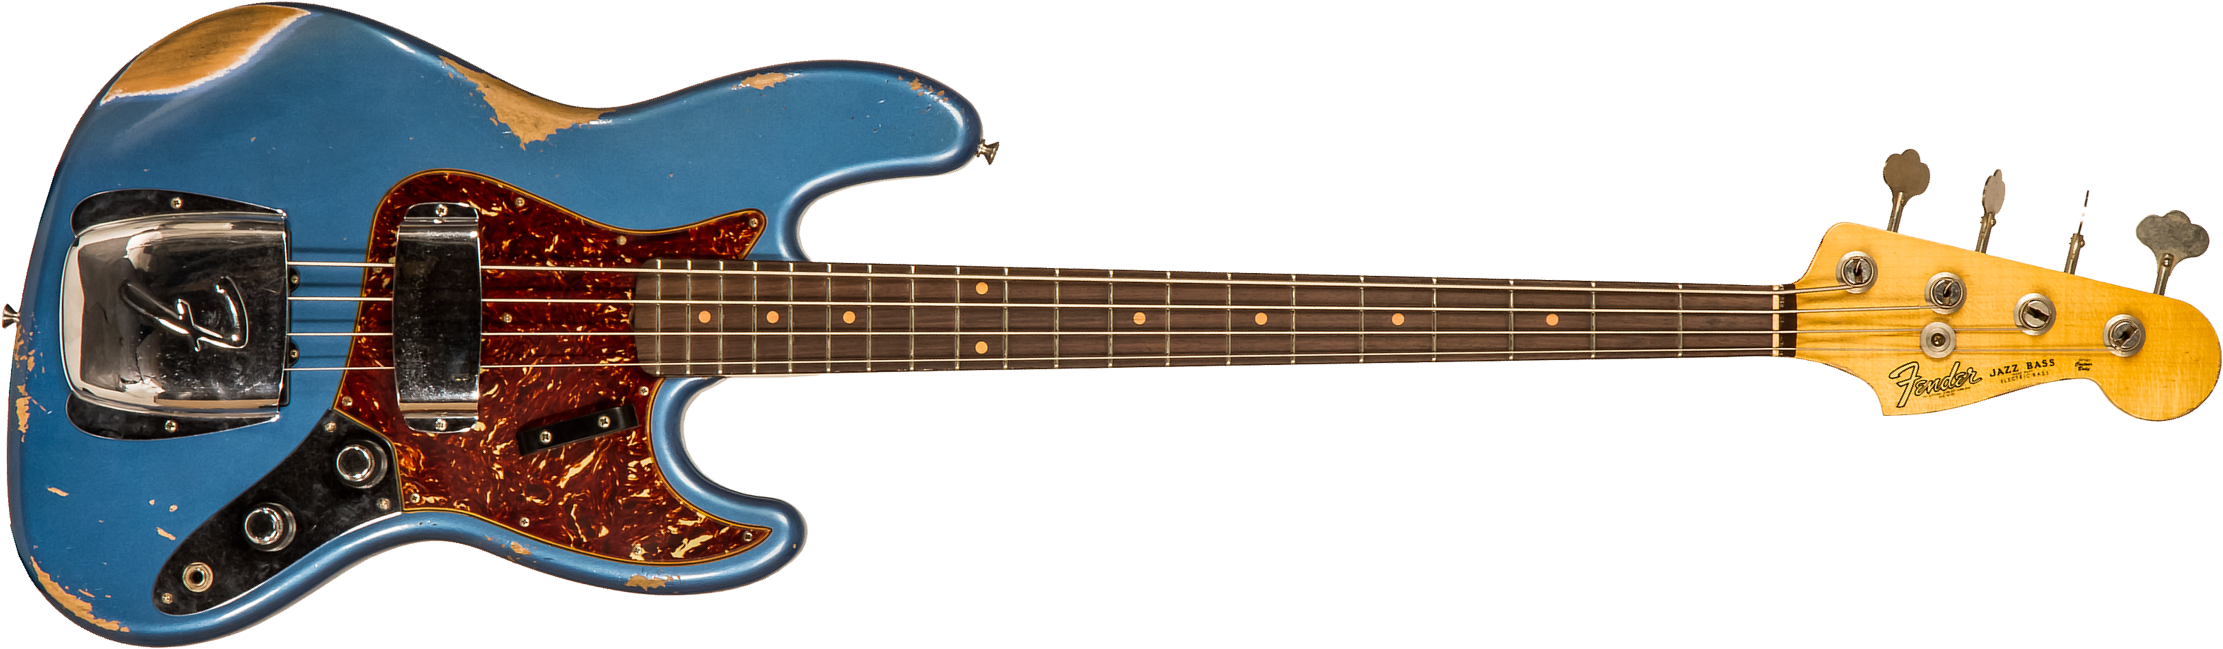 Fender Custom Shop Jazz Bass 1961 Rw #cz556667 - Heavy Relic Lake Placid Blue - Solid body elektrische bas - Main picture